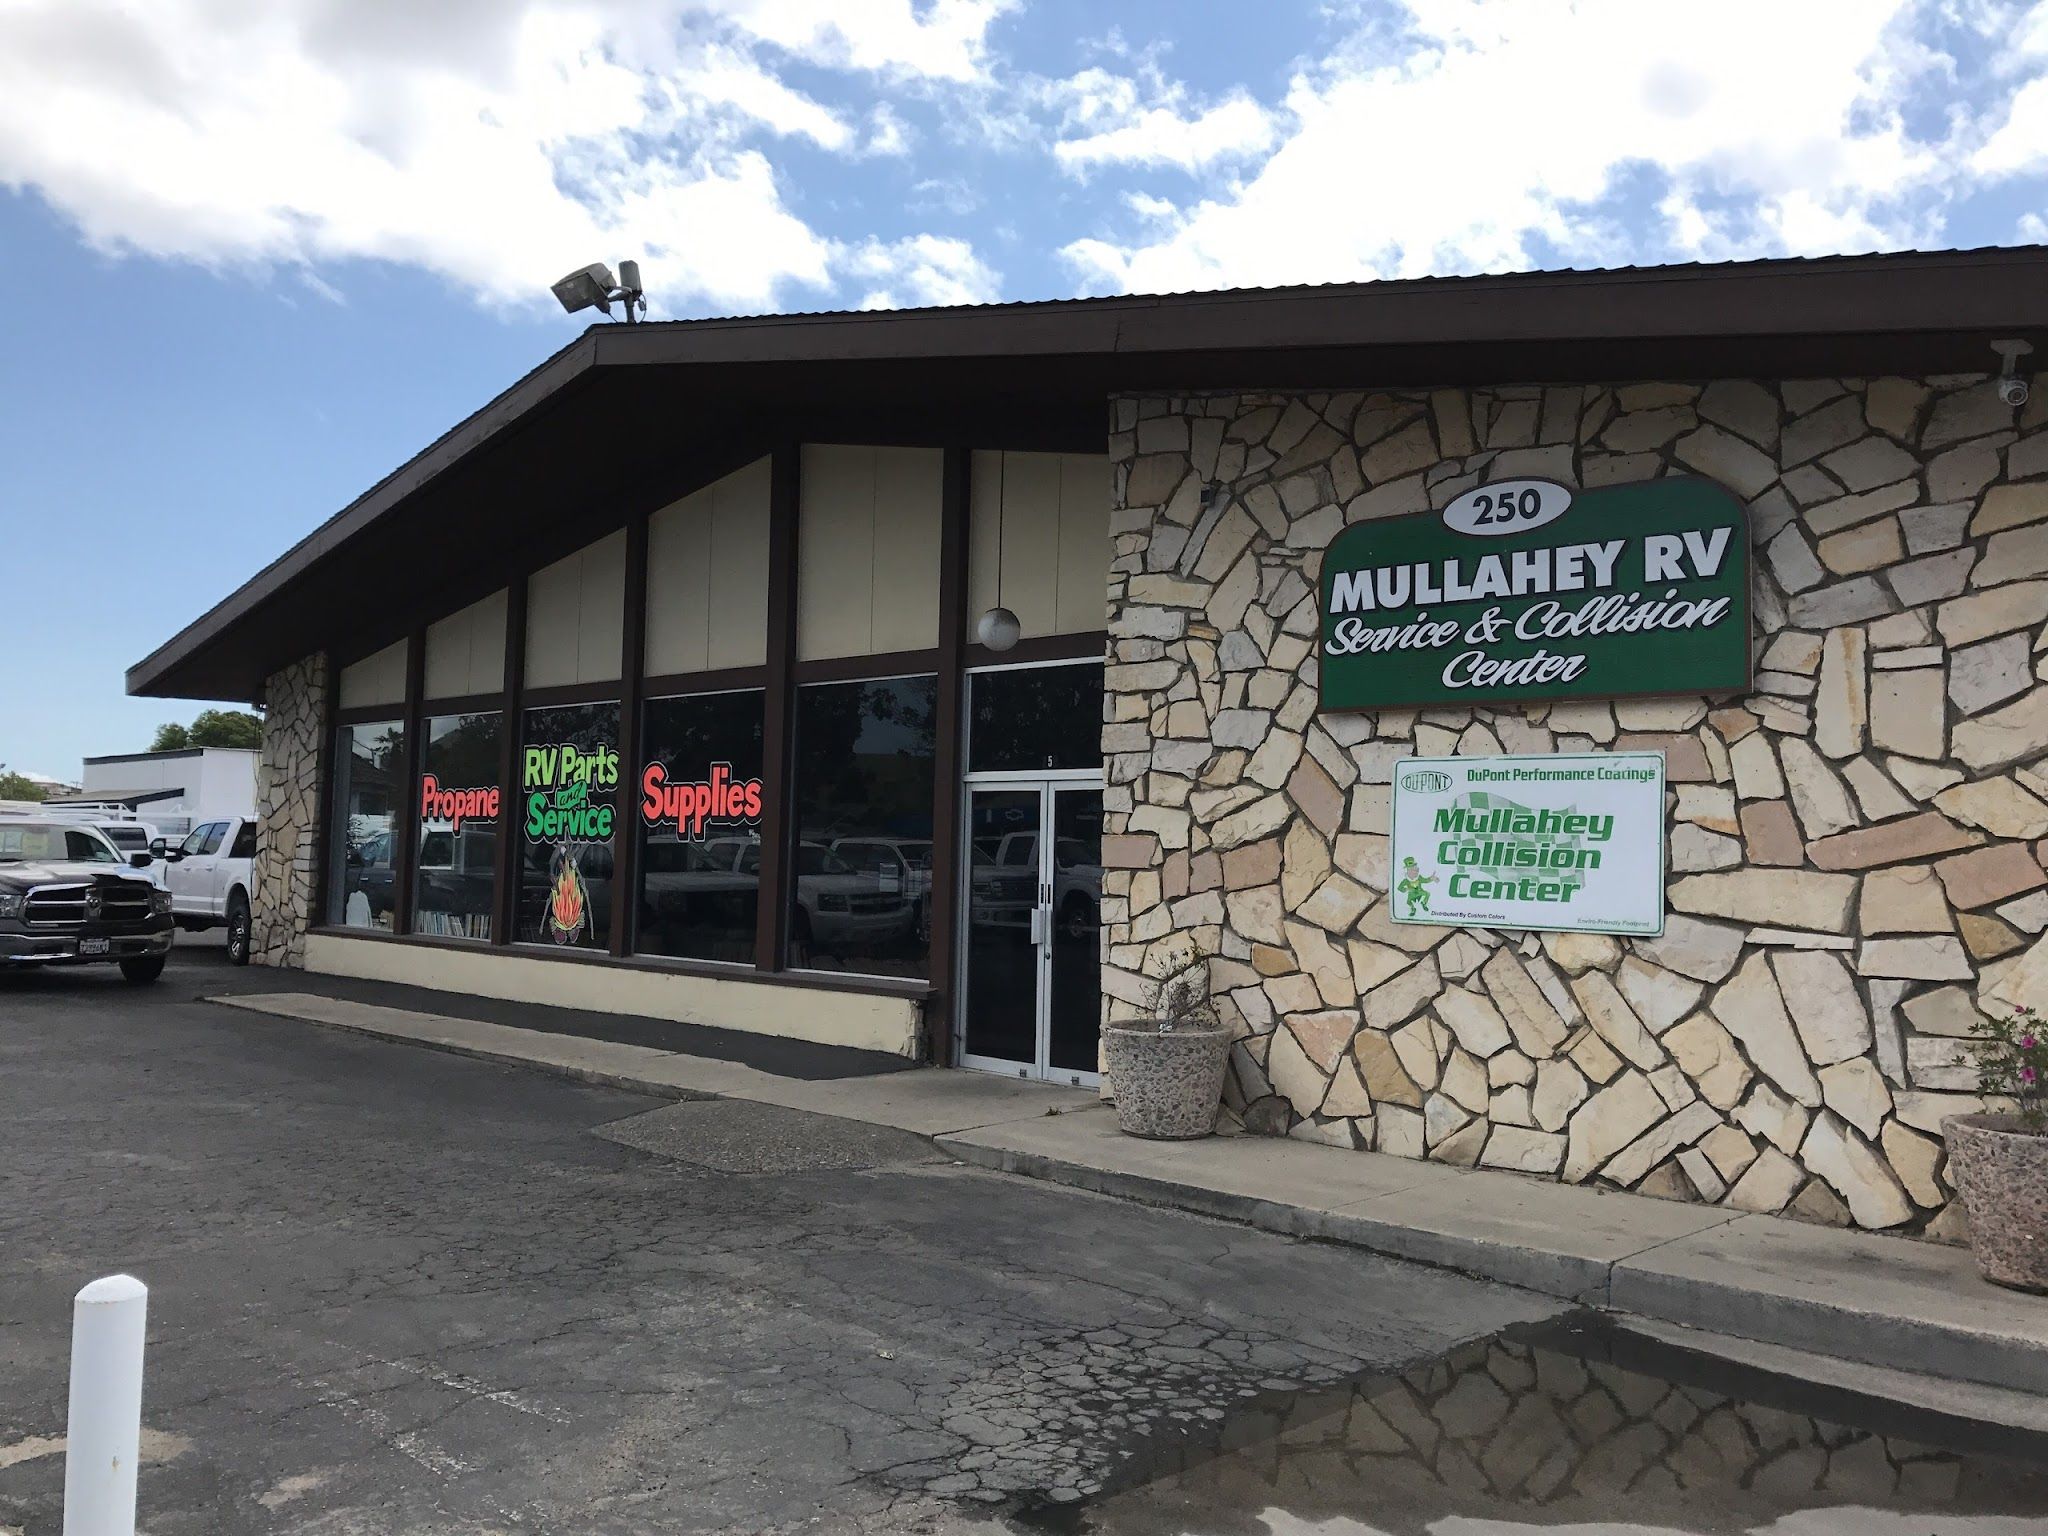 Mullahey RV Service & Collision Center